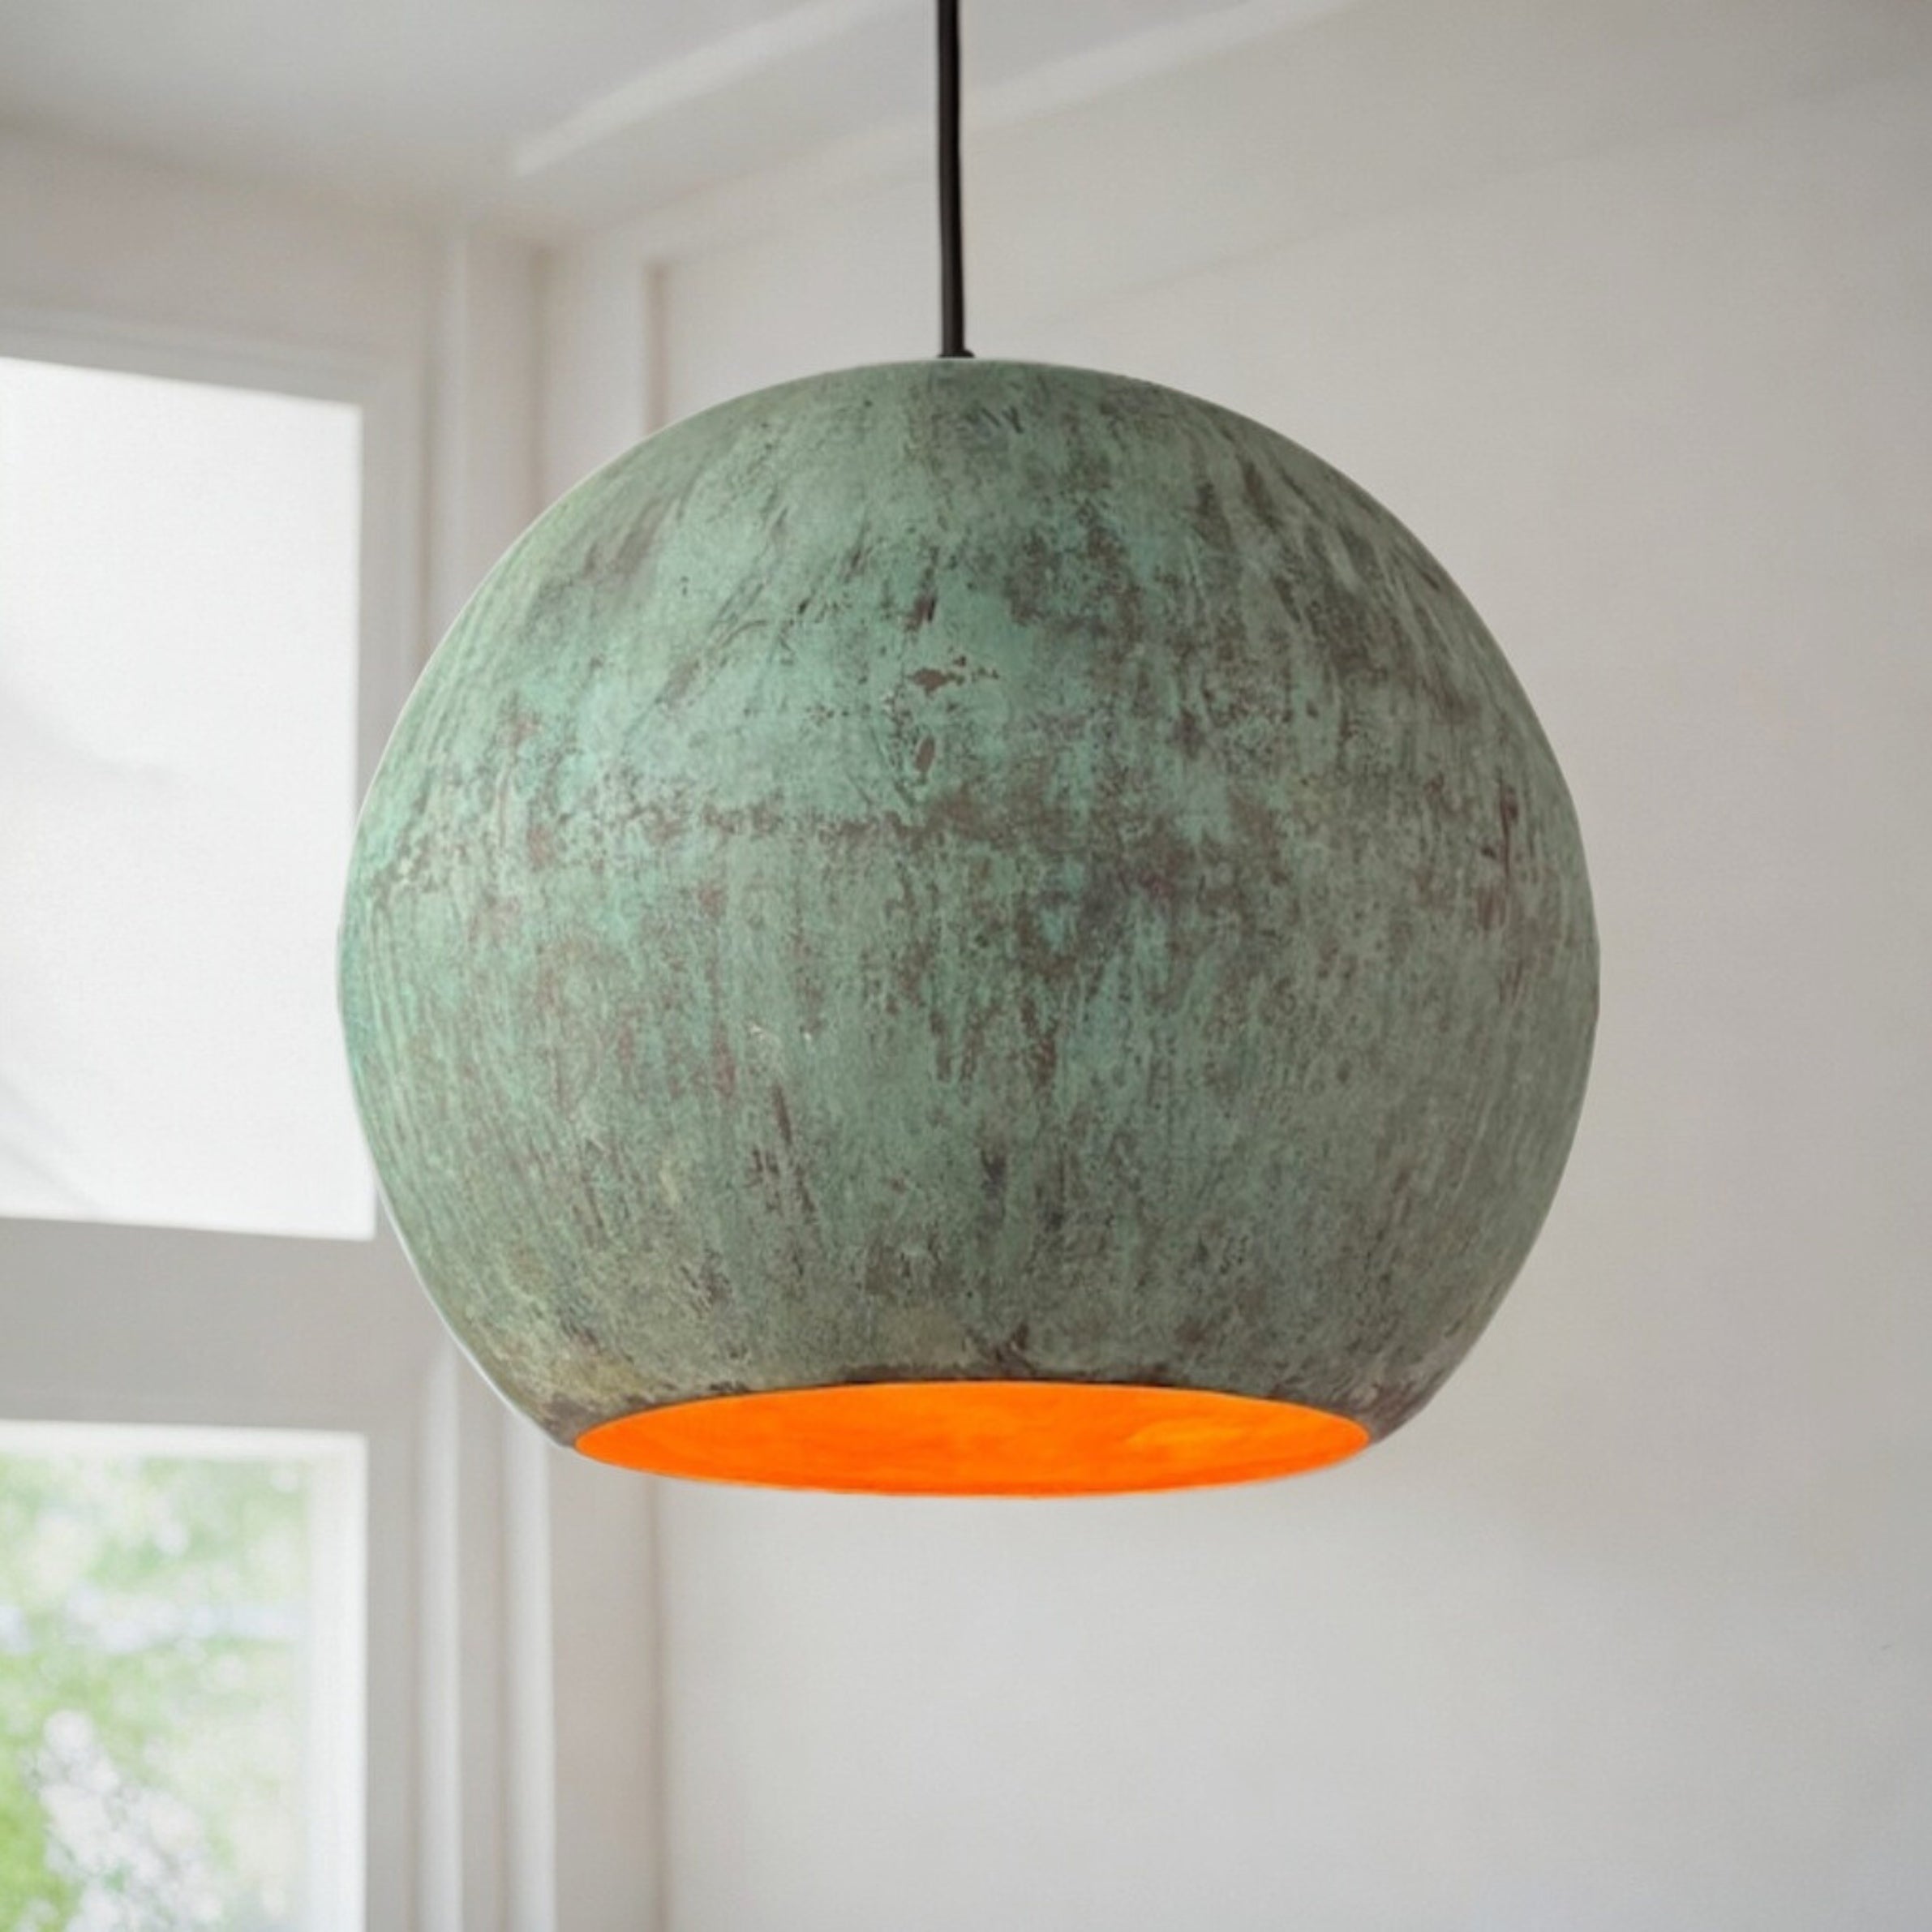 Green Patina Copper Globe Pendant Light,  Oxidized Farmhouse Kitchen Lighting,